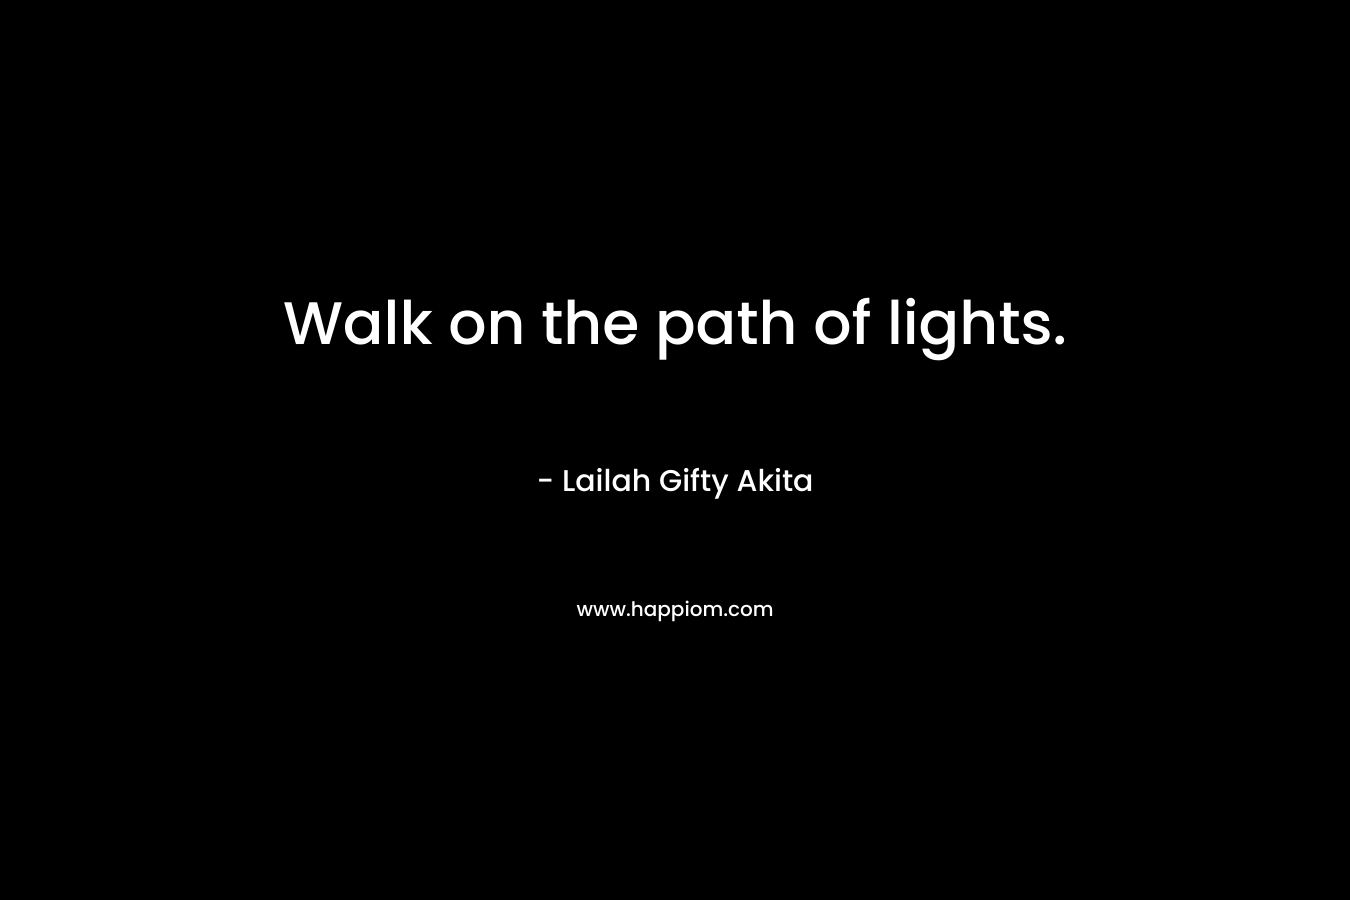 Walk on the path of lights.